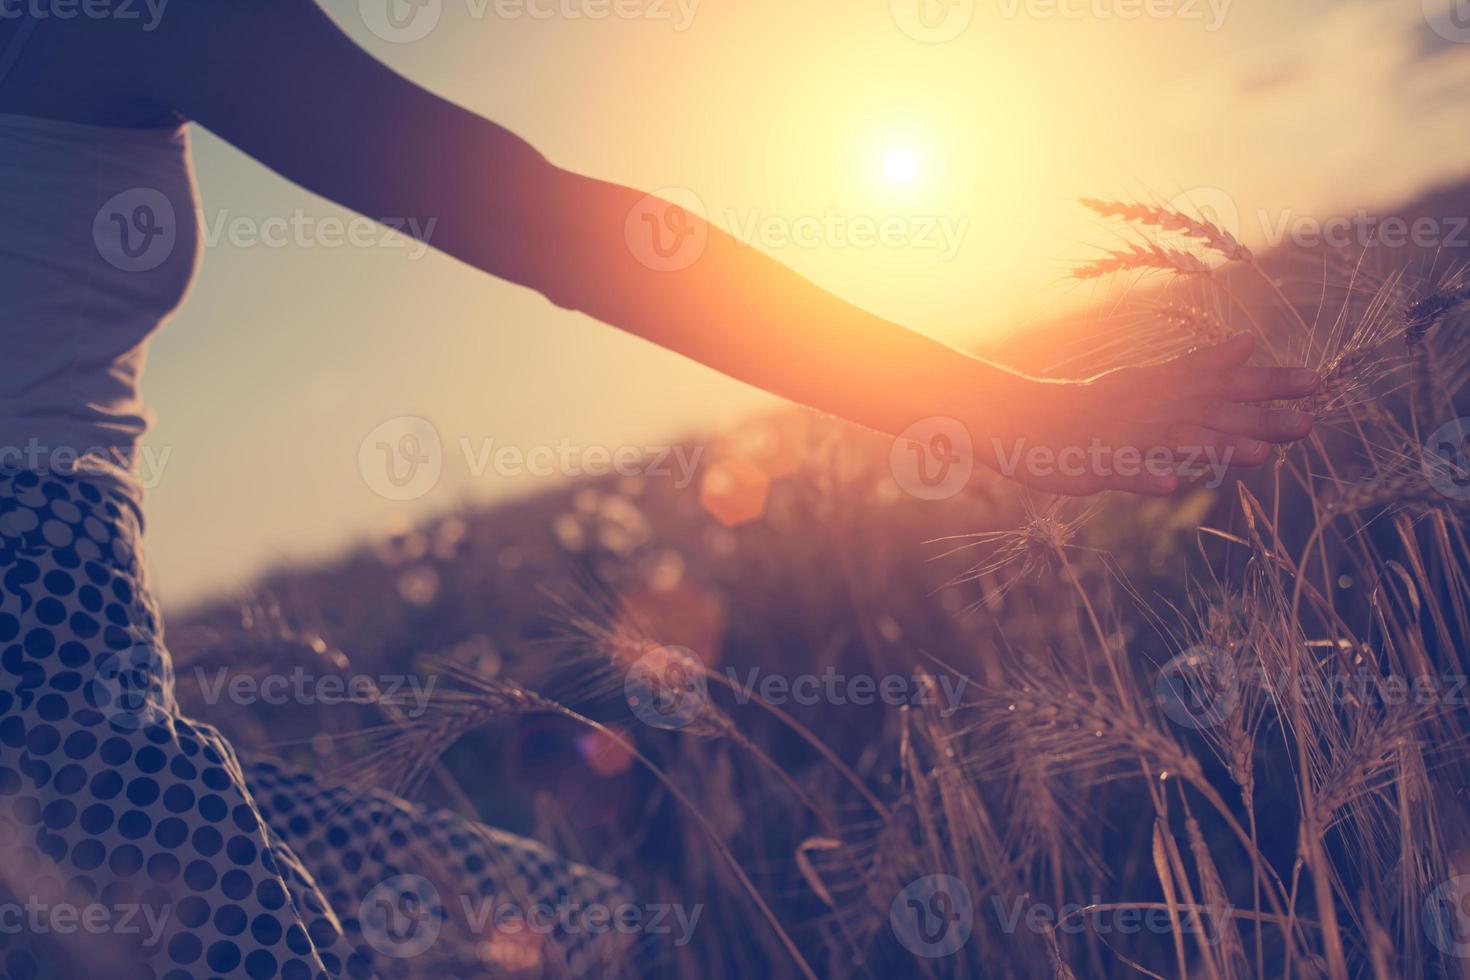 Girl's hand touching wheat spikes photo